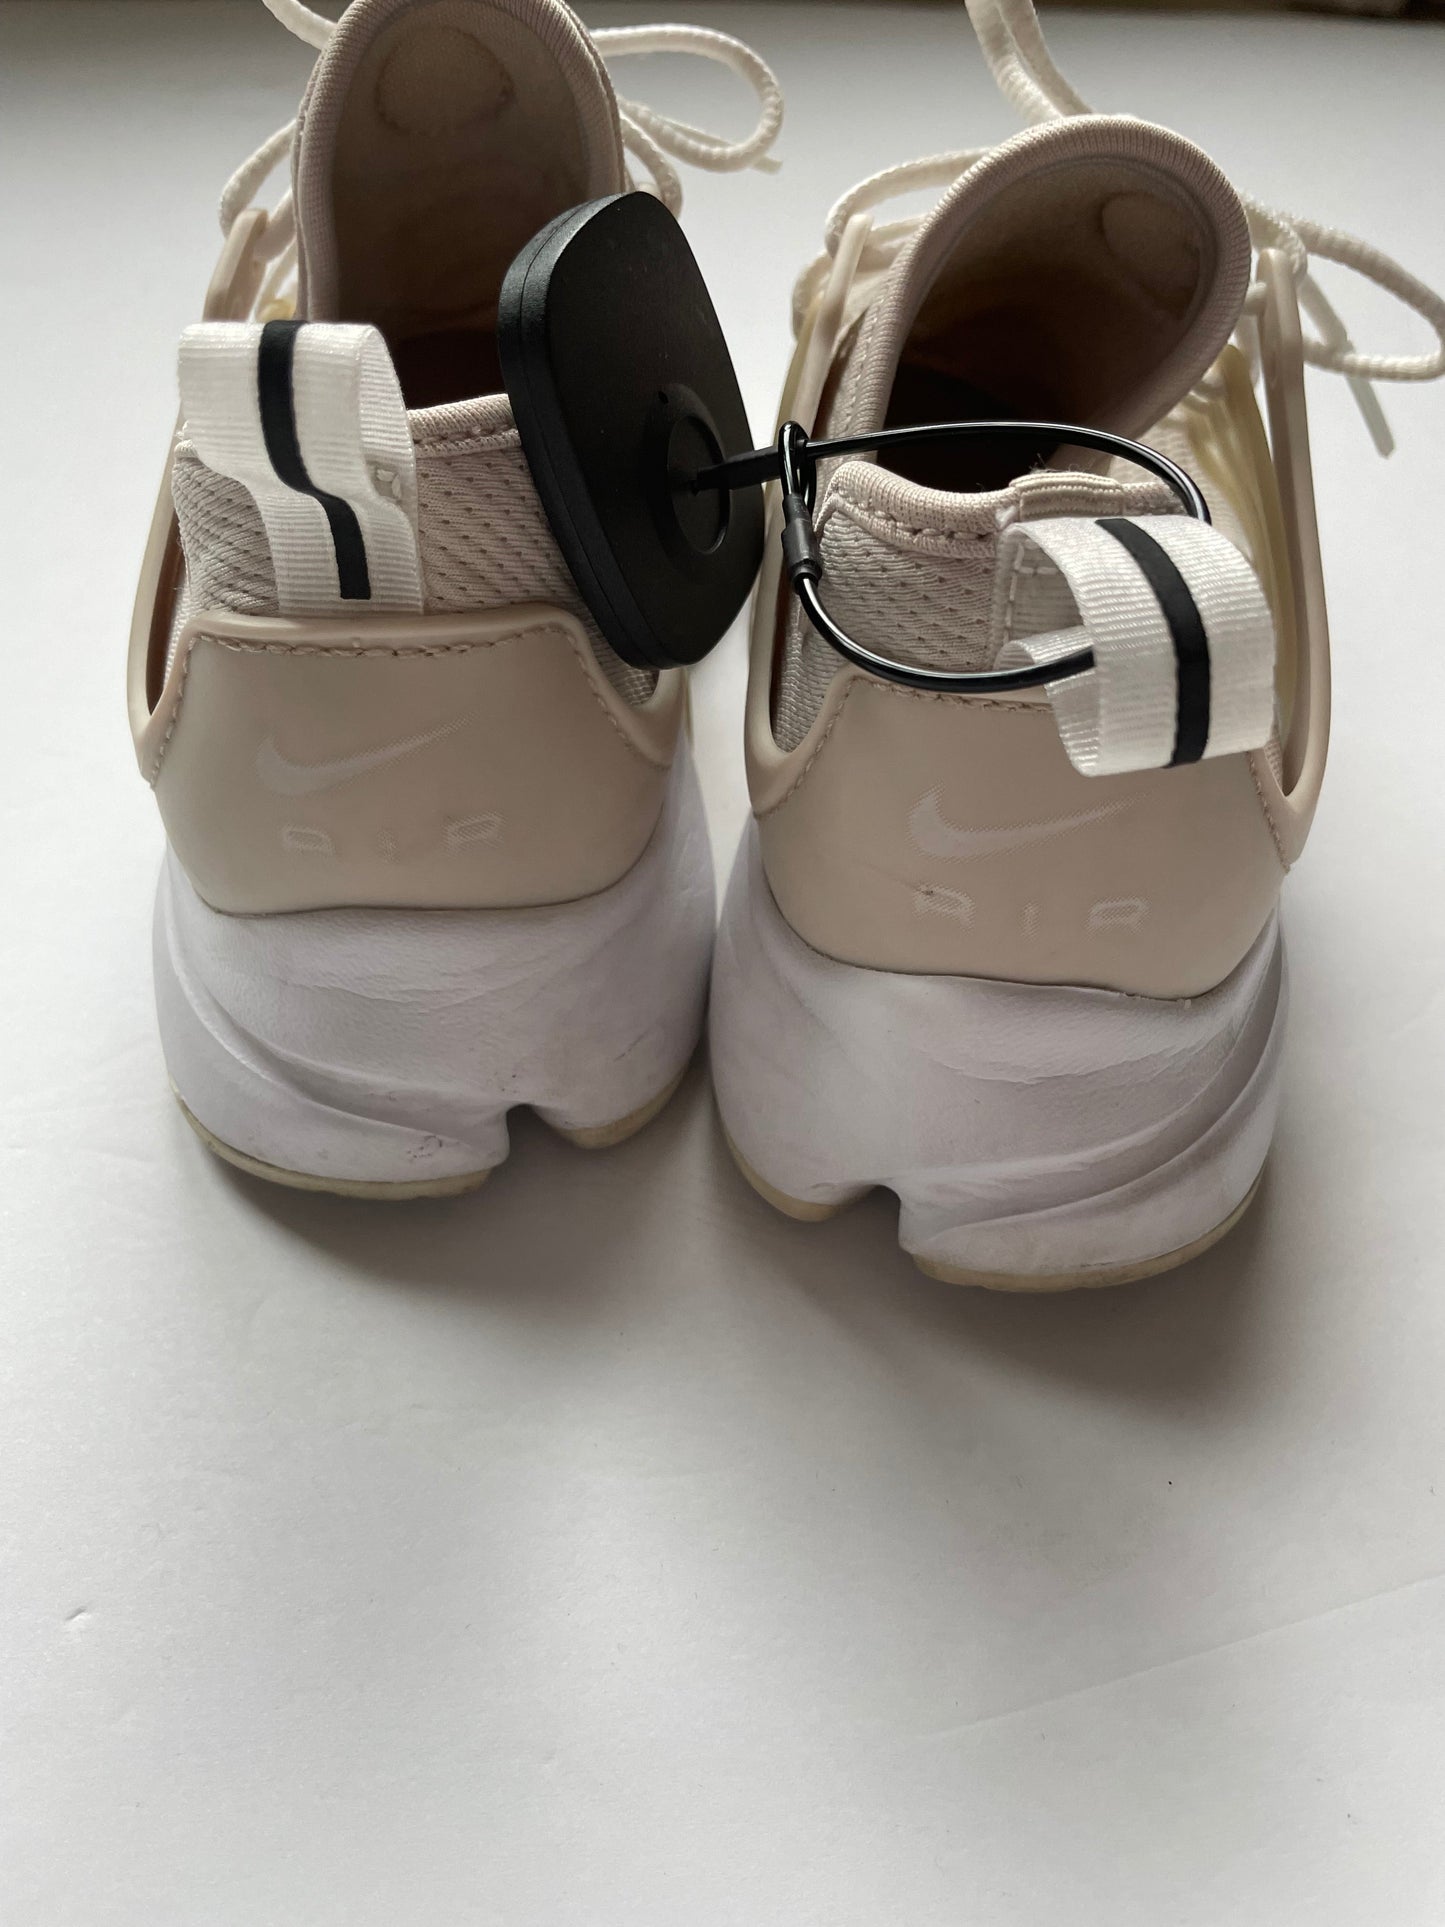 Beige Shoes Athletic Adidas, Size 6